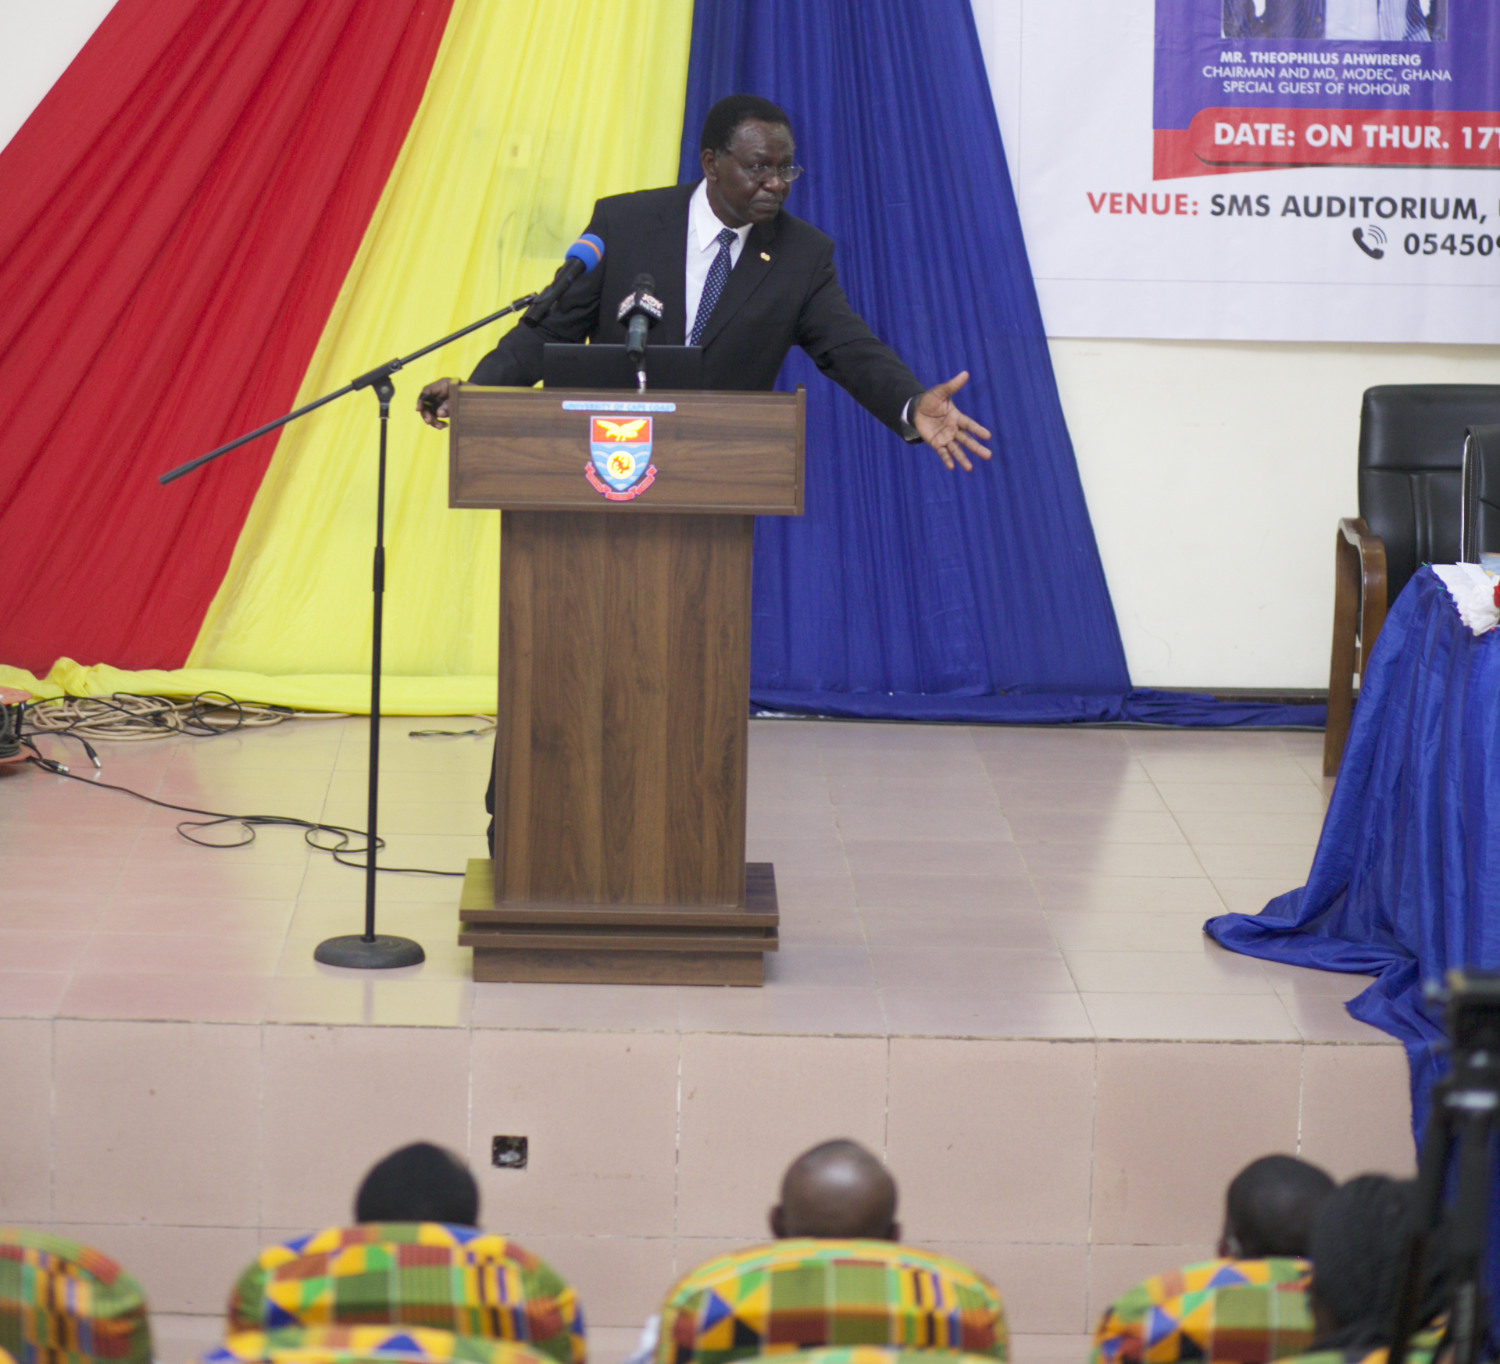 Prof. Omowumi O. Iledare speaking at a podium